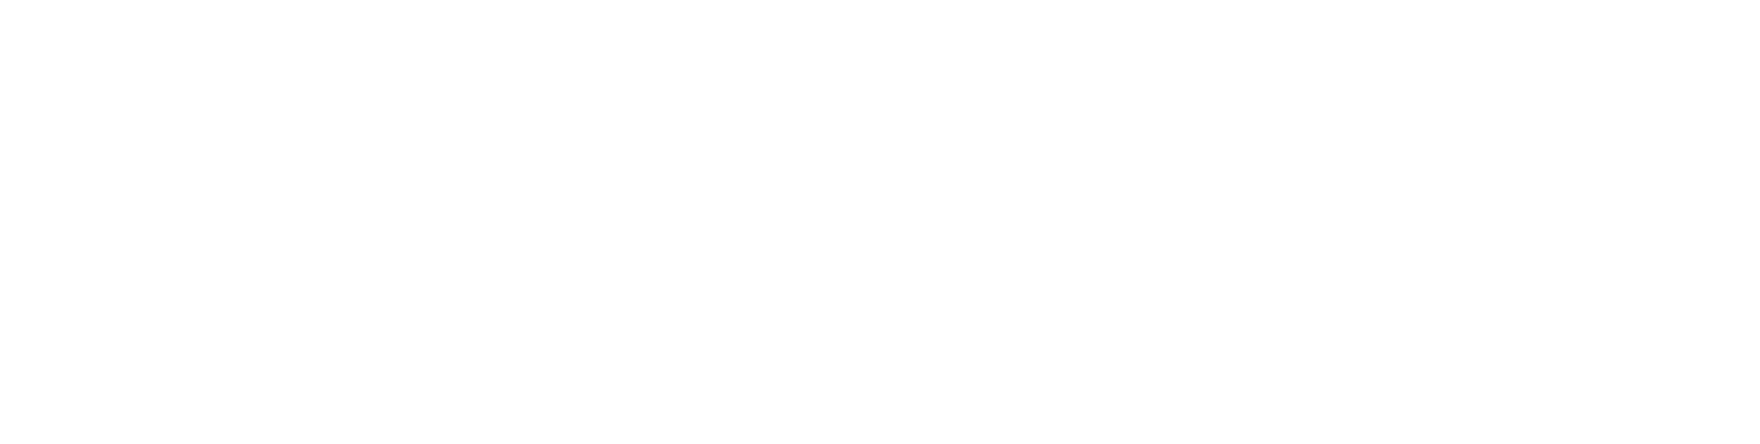 Five Iron Golf Logo